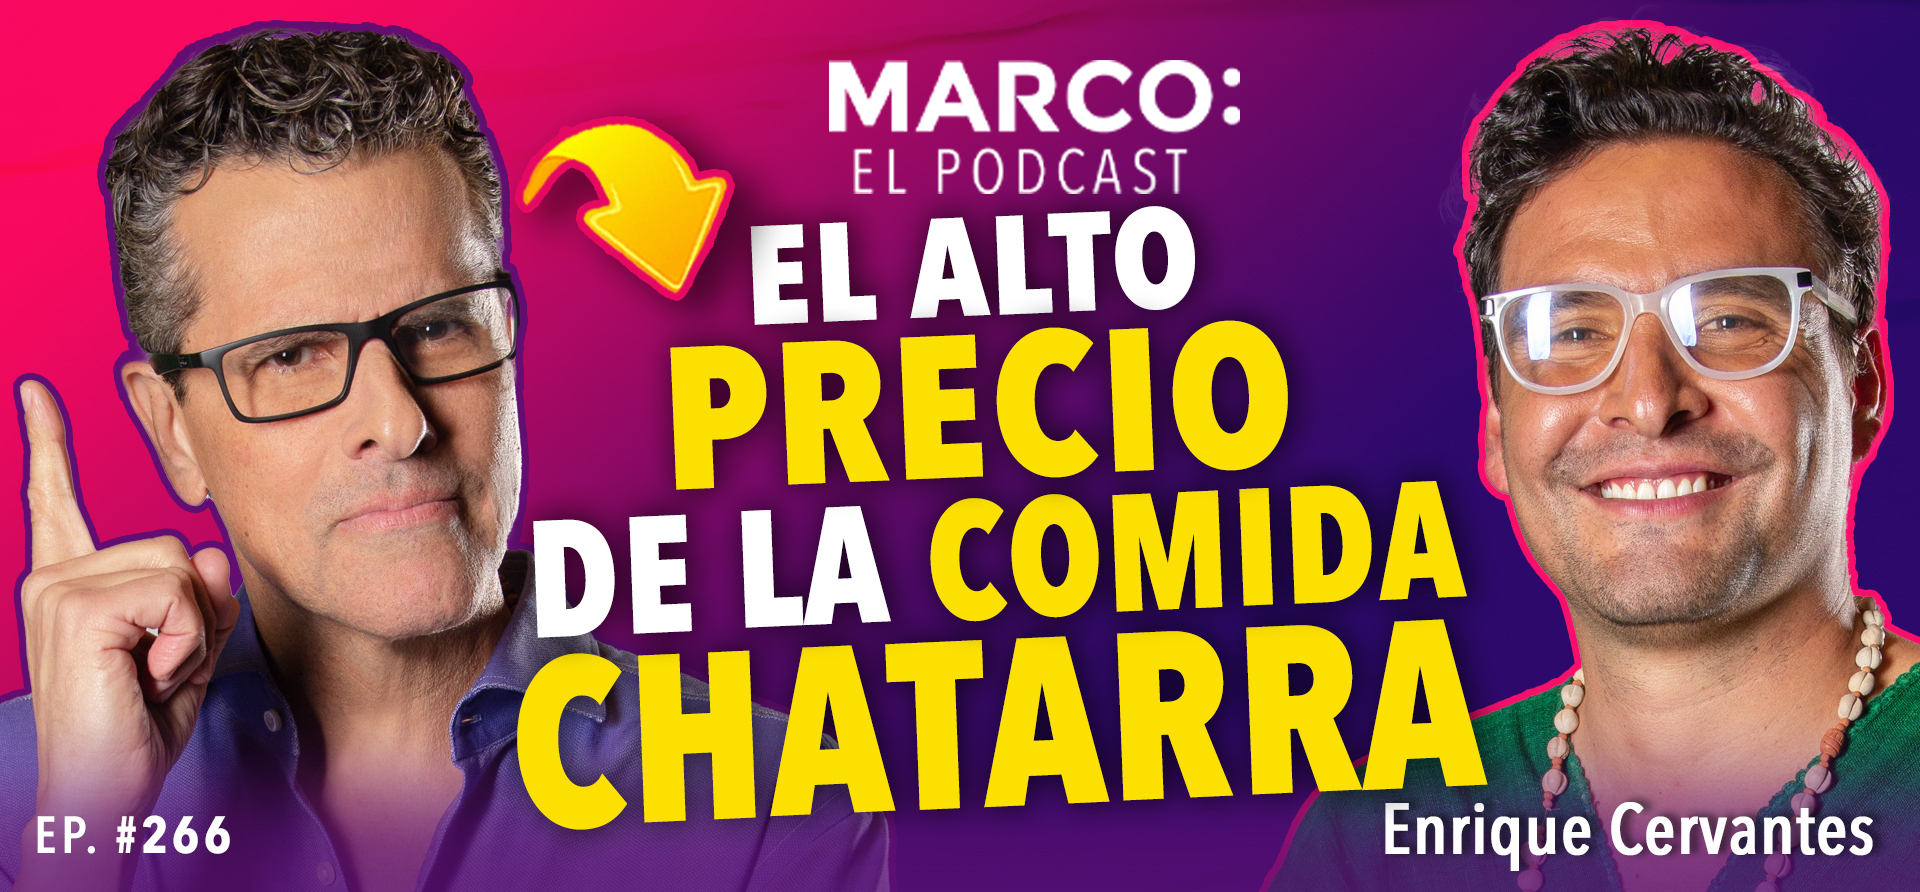 Enrique Cervantes en Marco: El Podcast